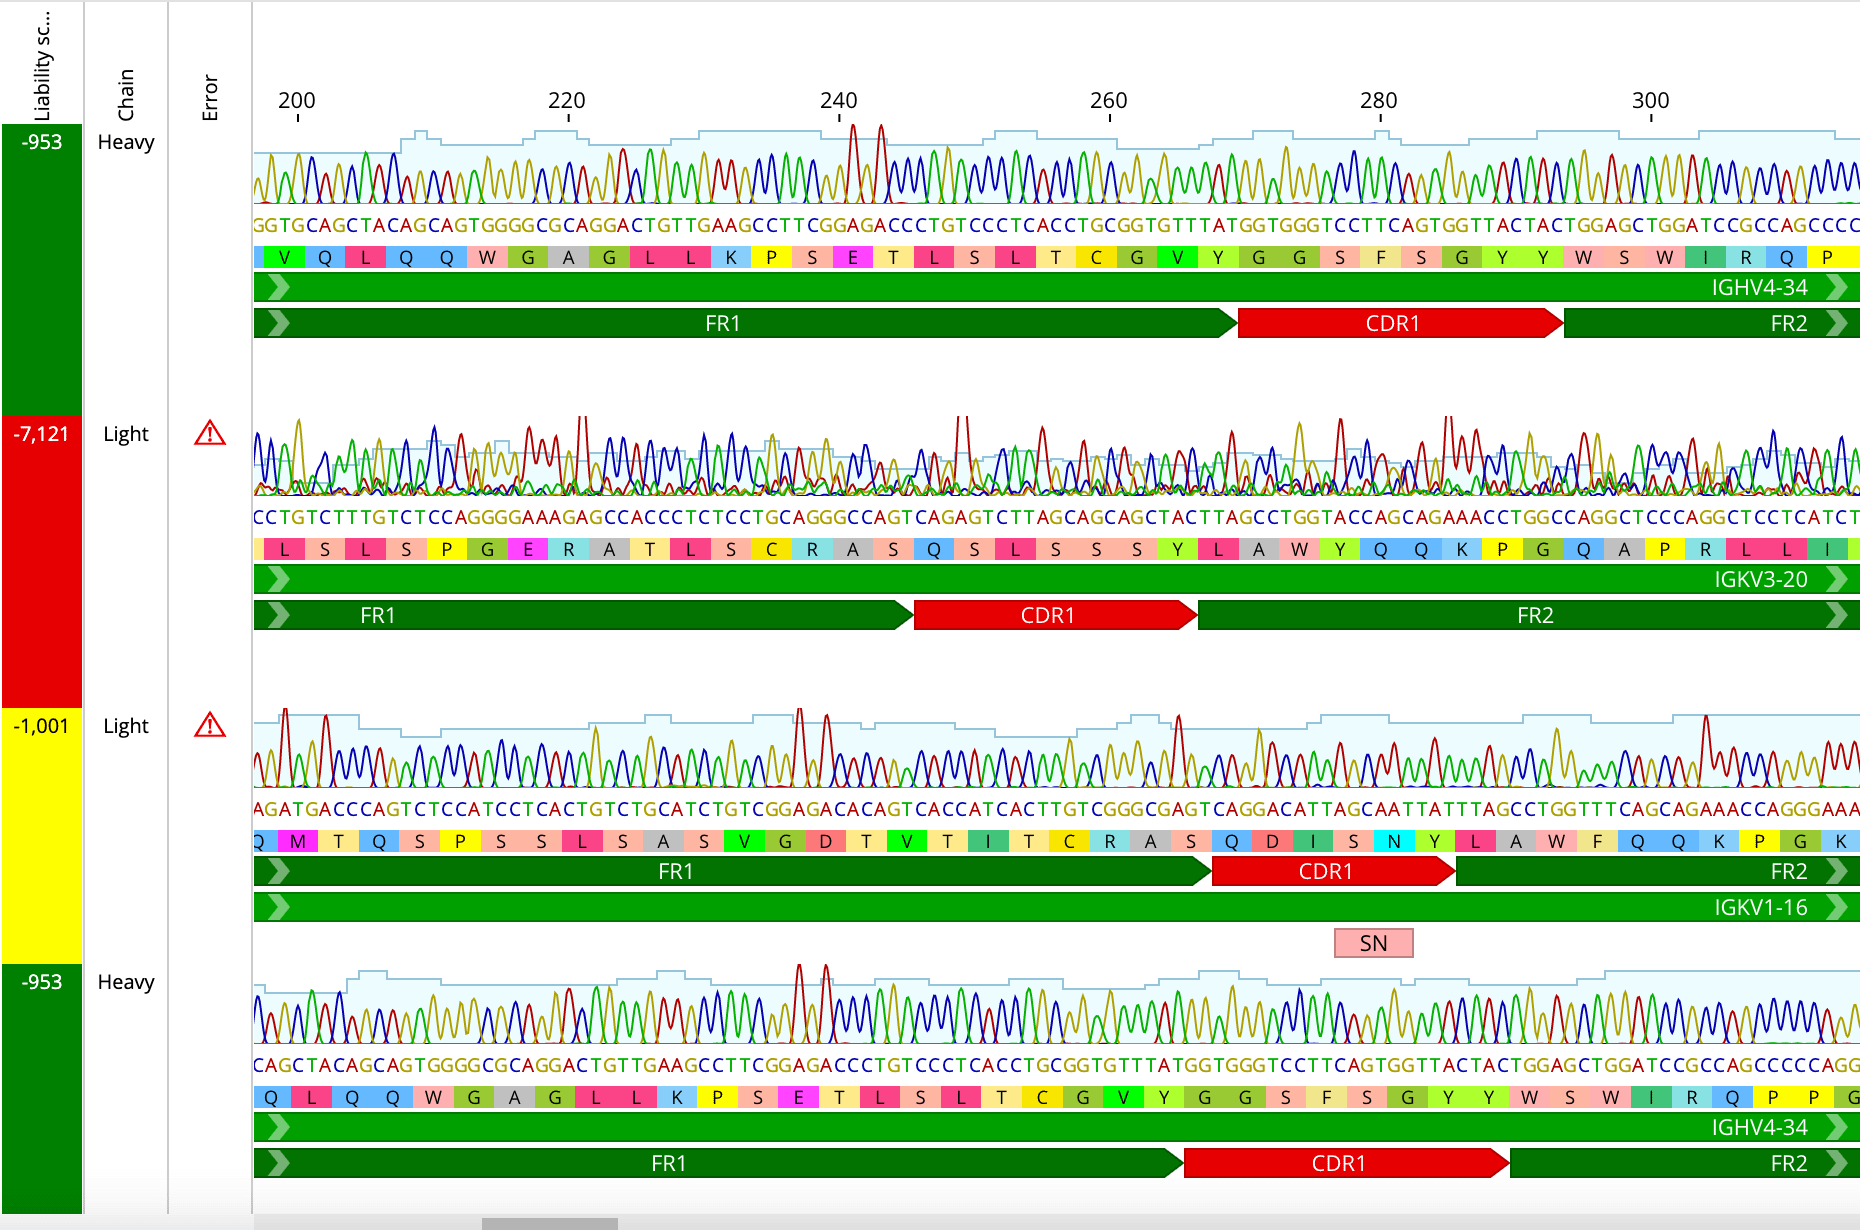 Annotated Sanger Antibody Sequences